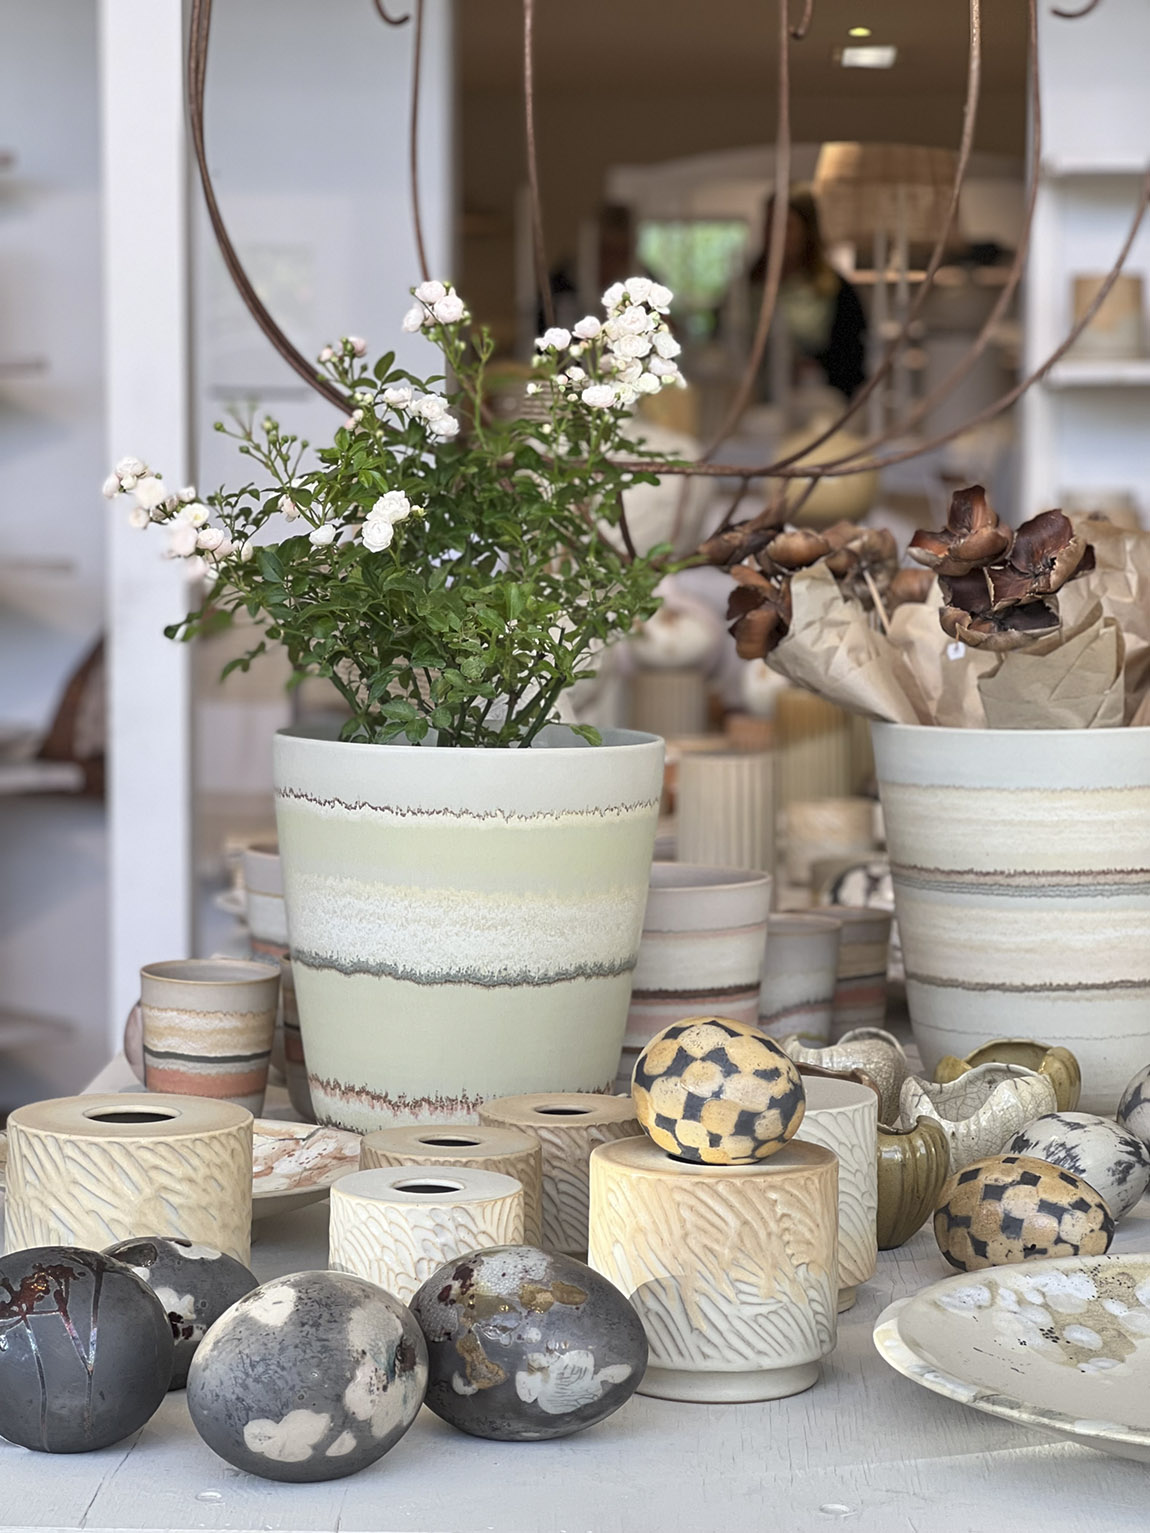 Paradisverkstaden: Slow living through exquisite handcrafted stoneware